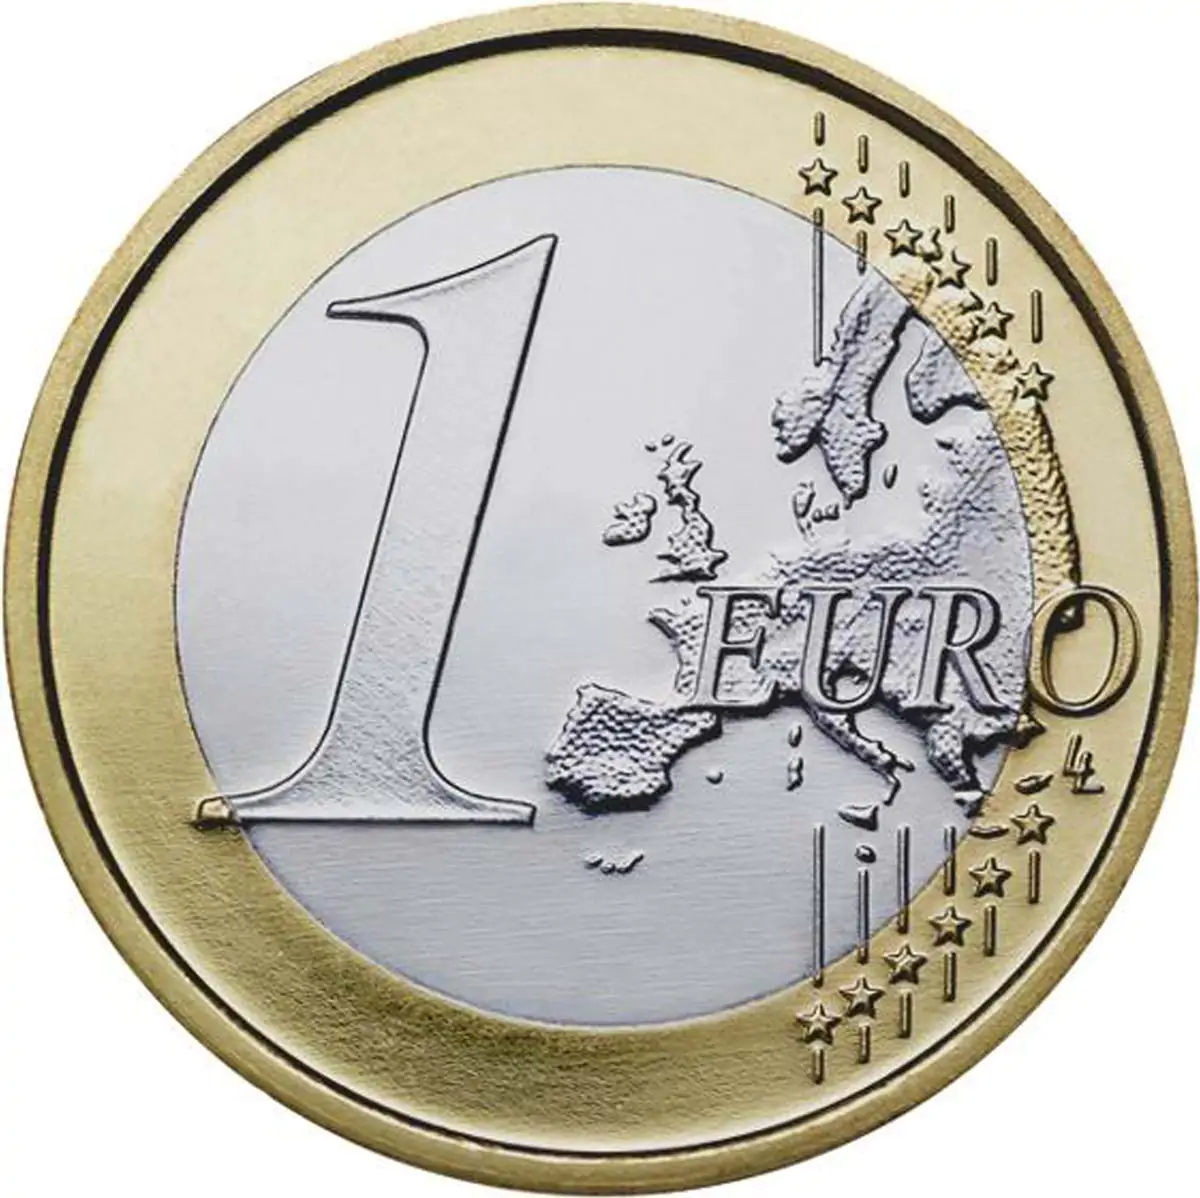 cambio euro dollaro